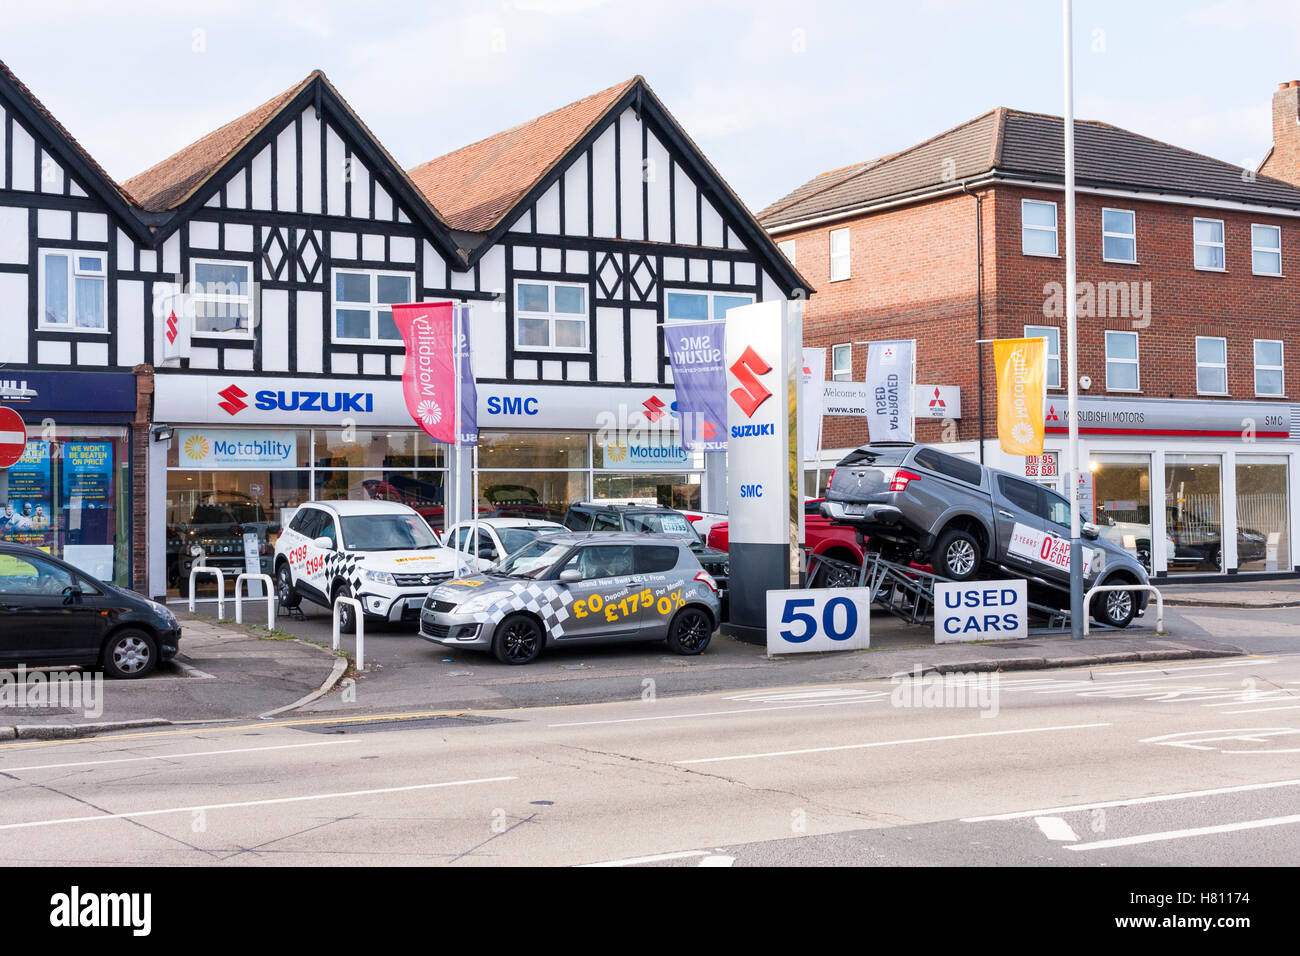 View of Suzuki Garage exterior and forecourt, Hillingdon Circus, Hillingdon, Greater London, UK Stock Photo